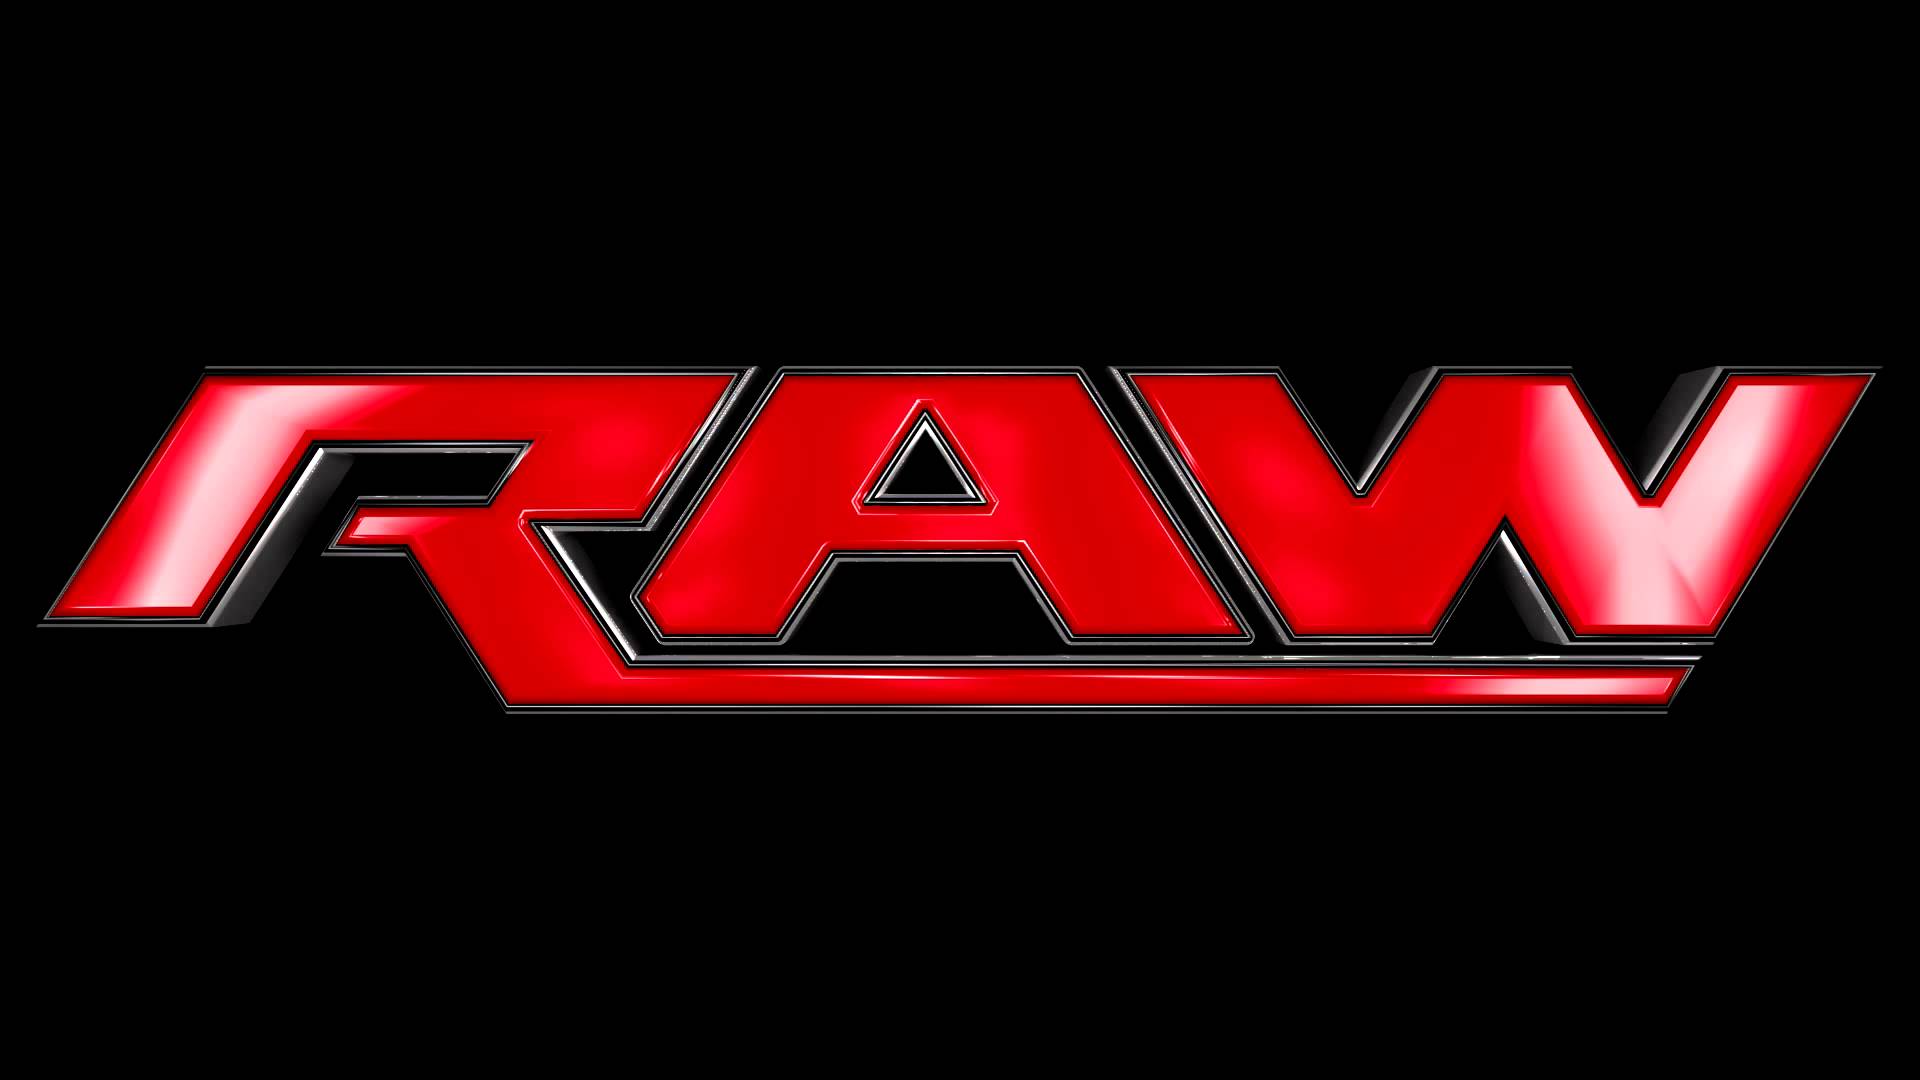 WWE Raw Theme Song. Movie Theme Songs & TV Soundtracks